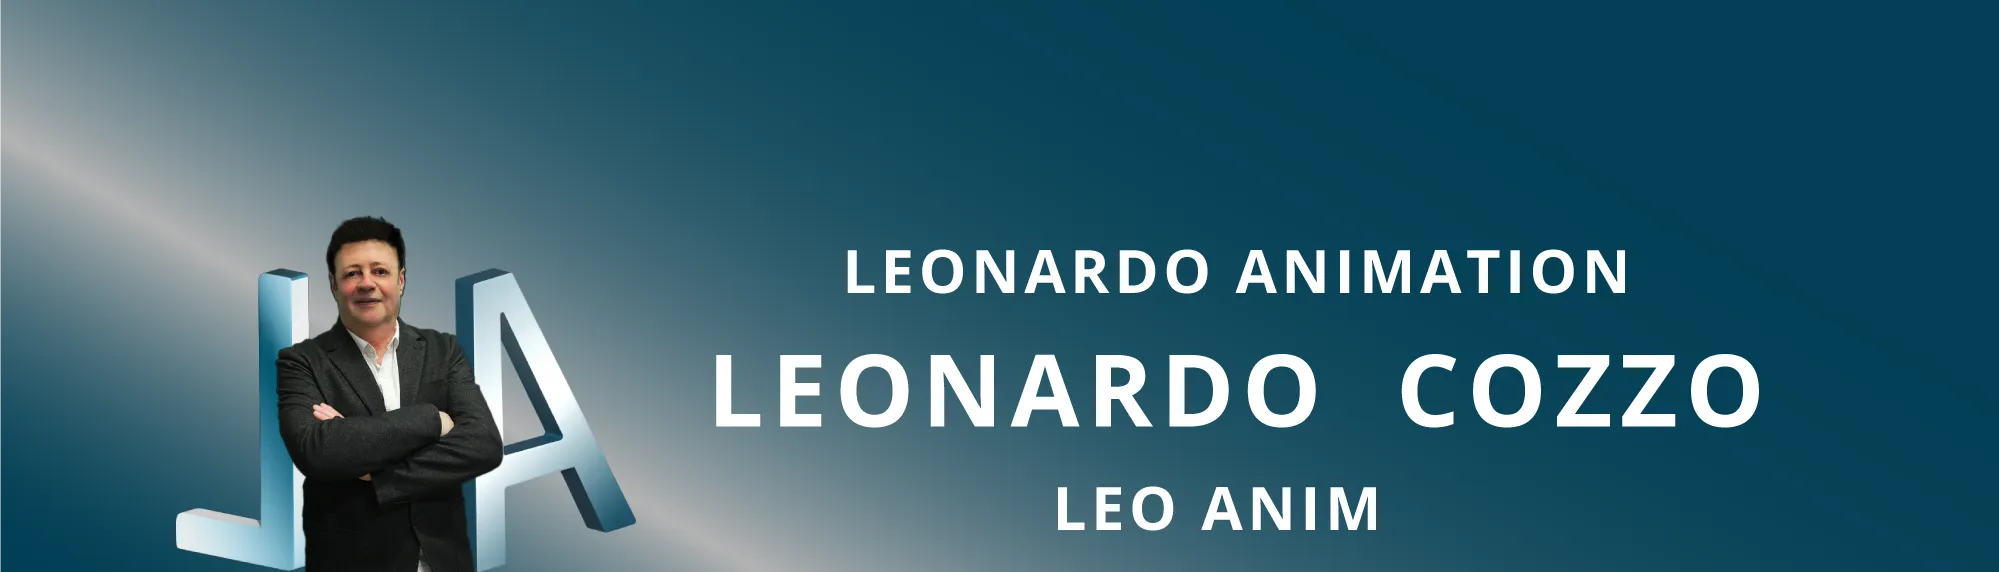 Bannière de leonardo cozzo apparaissant avec son logo de leonardo animation. Cette image comporte le texte Leonardo Animation, Leonardo Cozzo, Leo Anim.